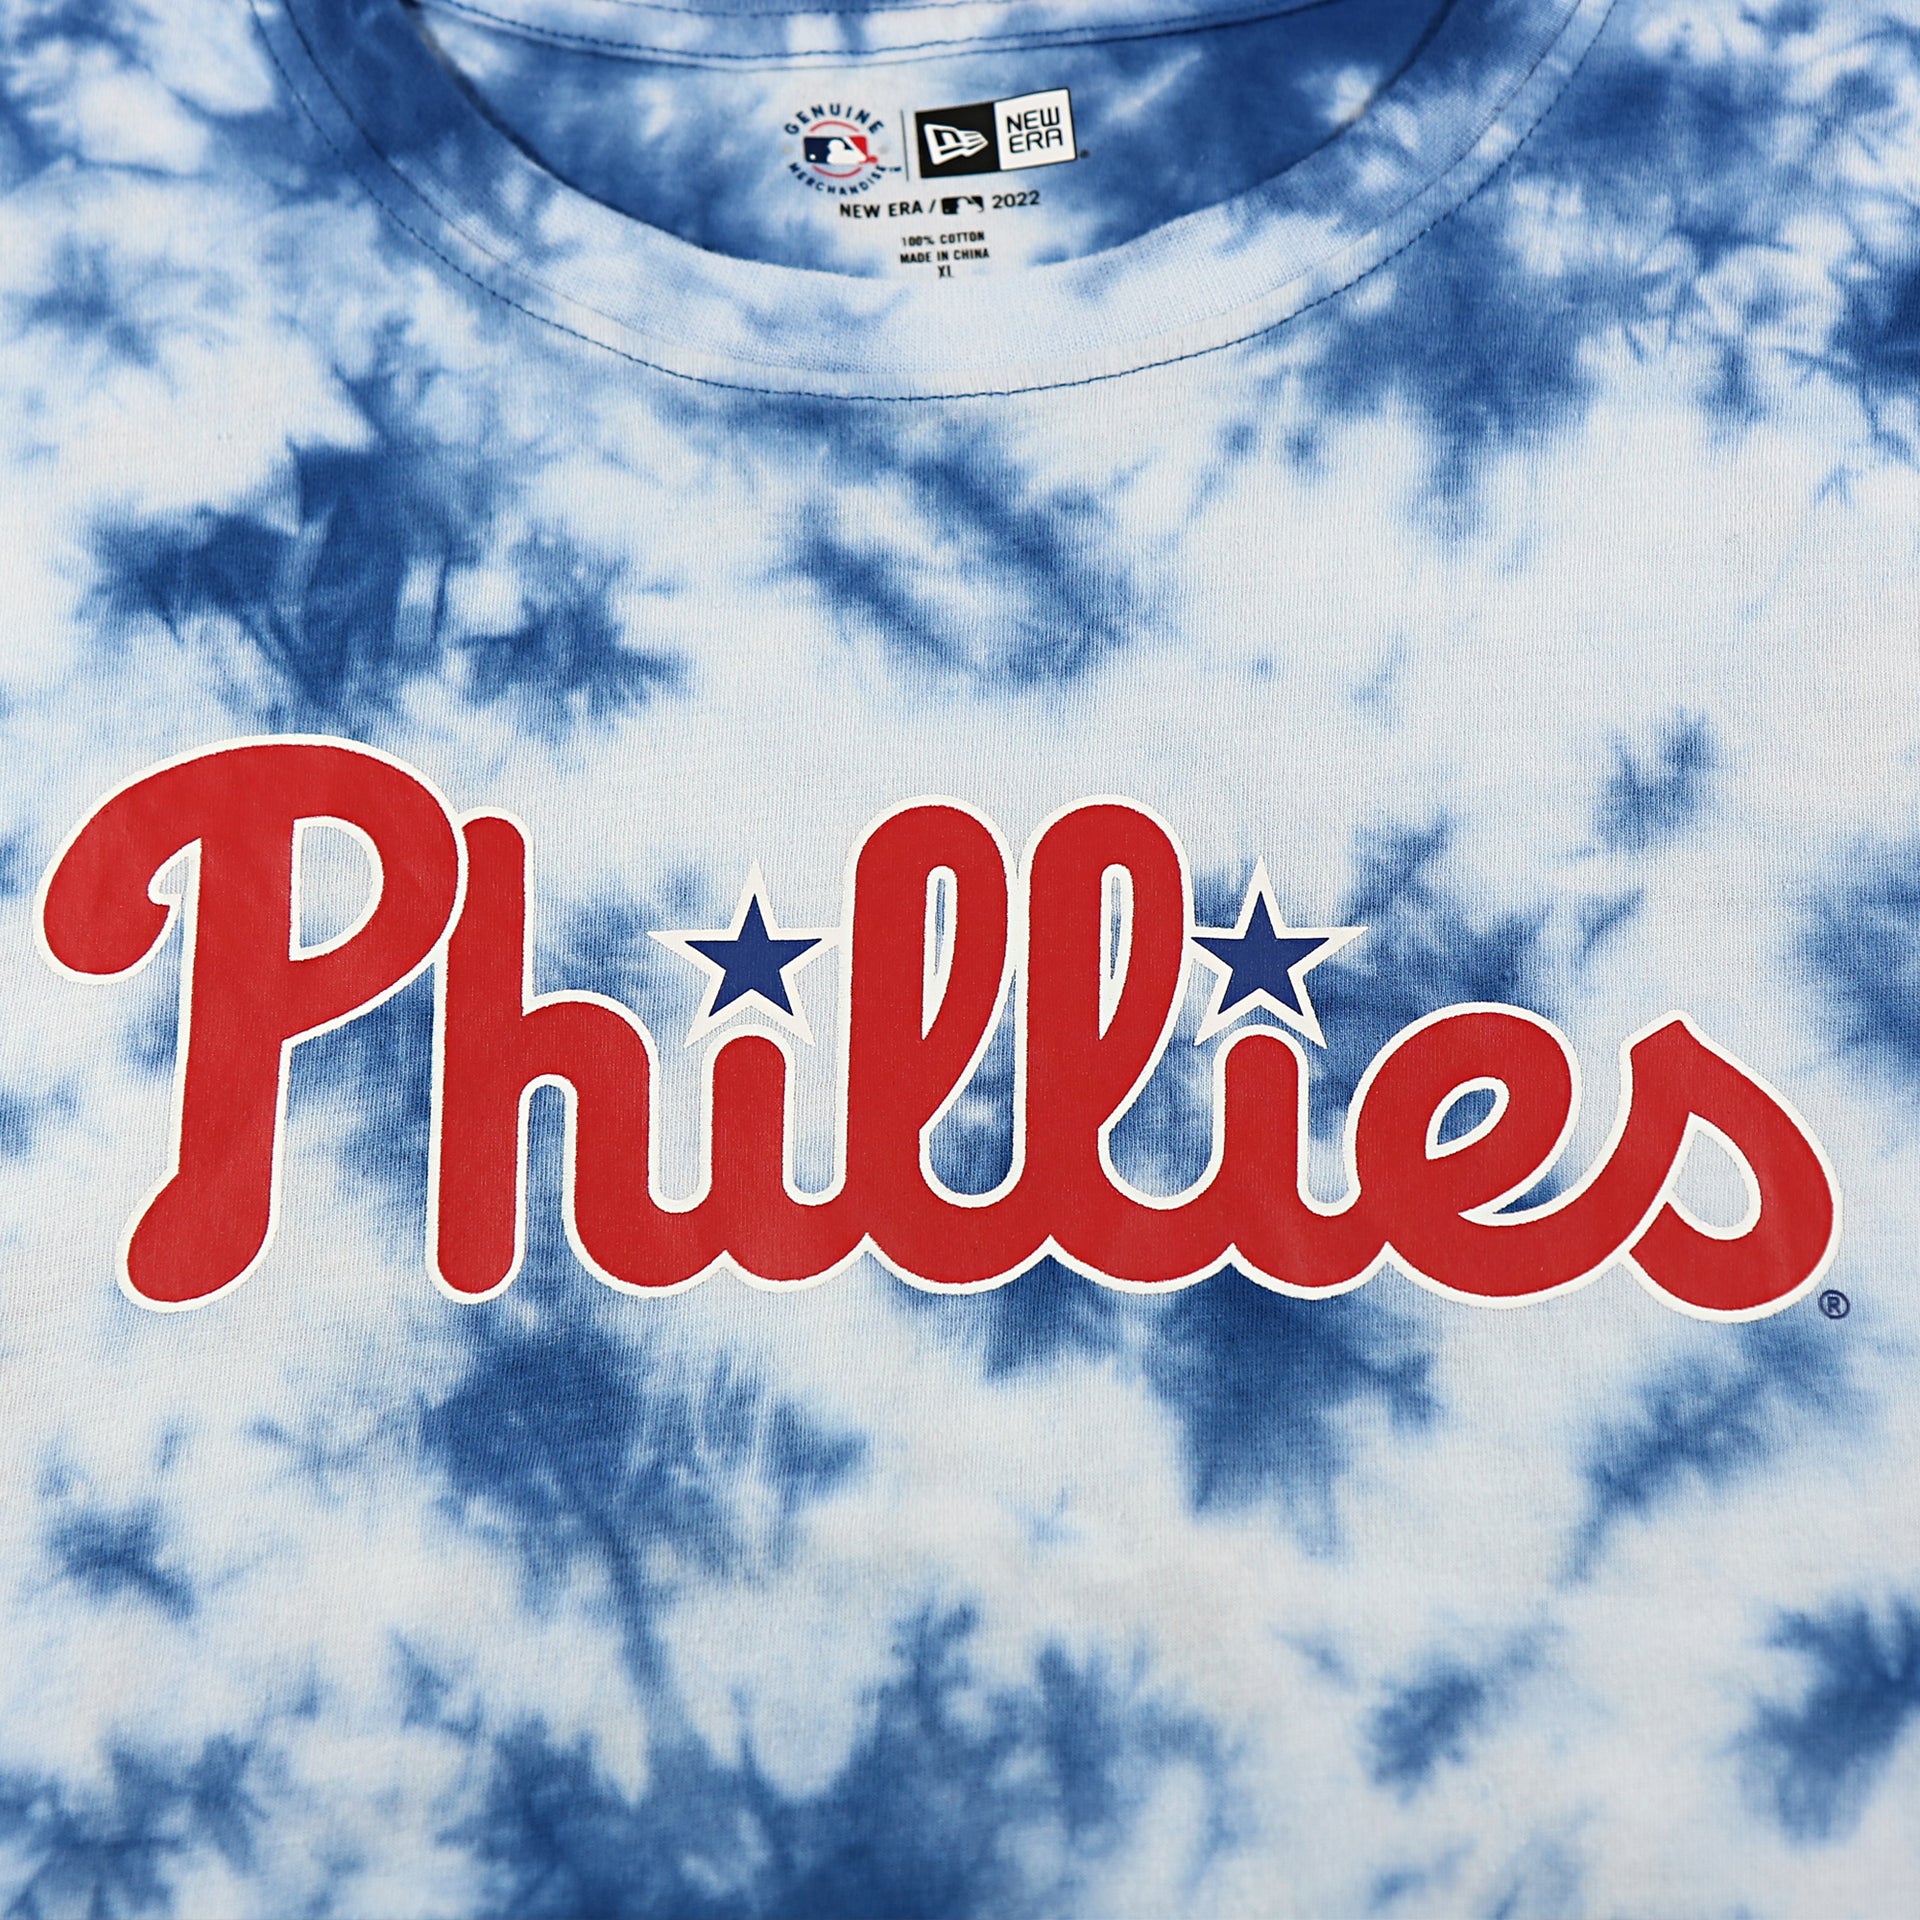 phillies wordmark on the Philadelphia Phillies Current Phillies Wordmark Tie-Dye MLB T-Shirt | Columbia Blue Tie-Dye Tshirt